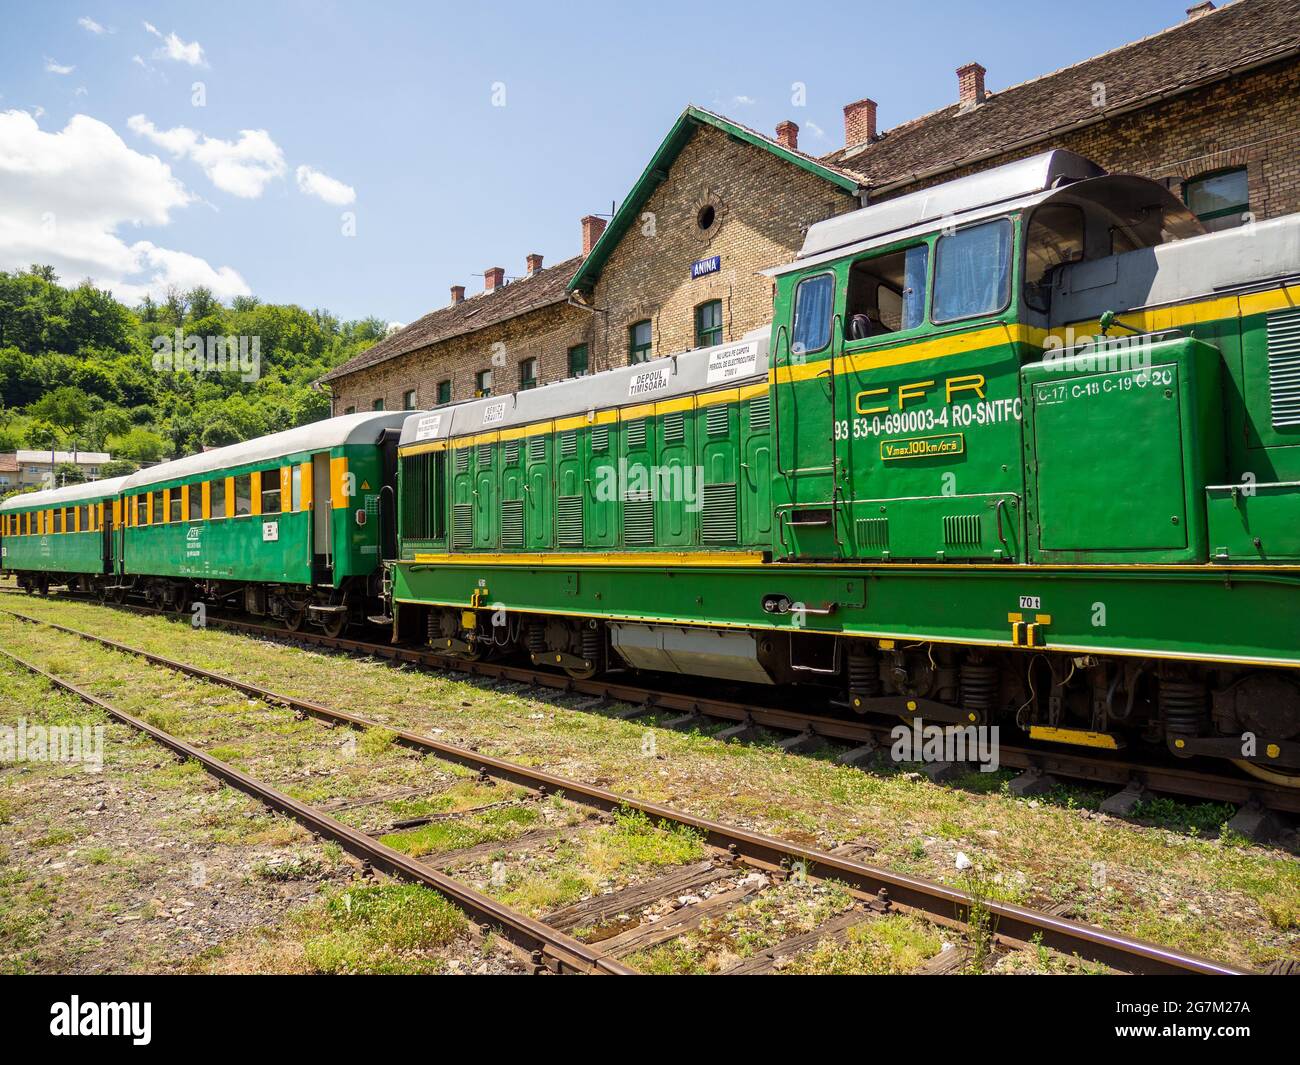 Zug auf rumänischer Sattelbahn, stationiert am bahnhof anina Stockfoto